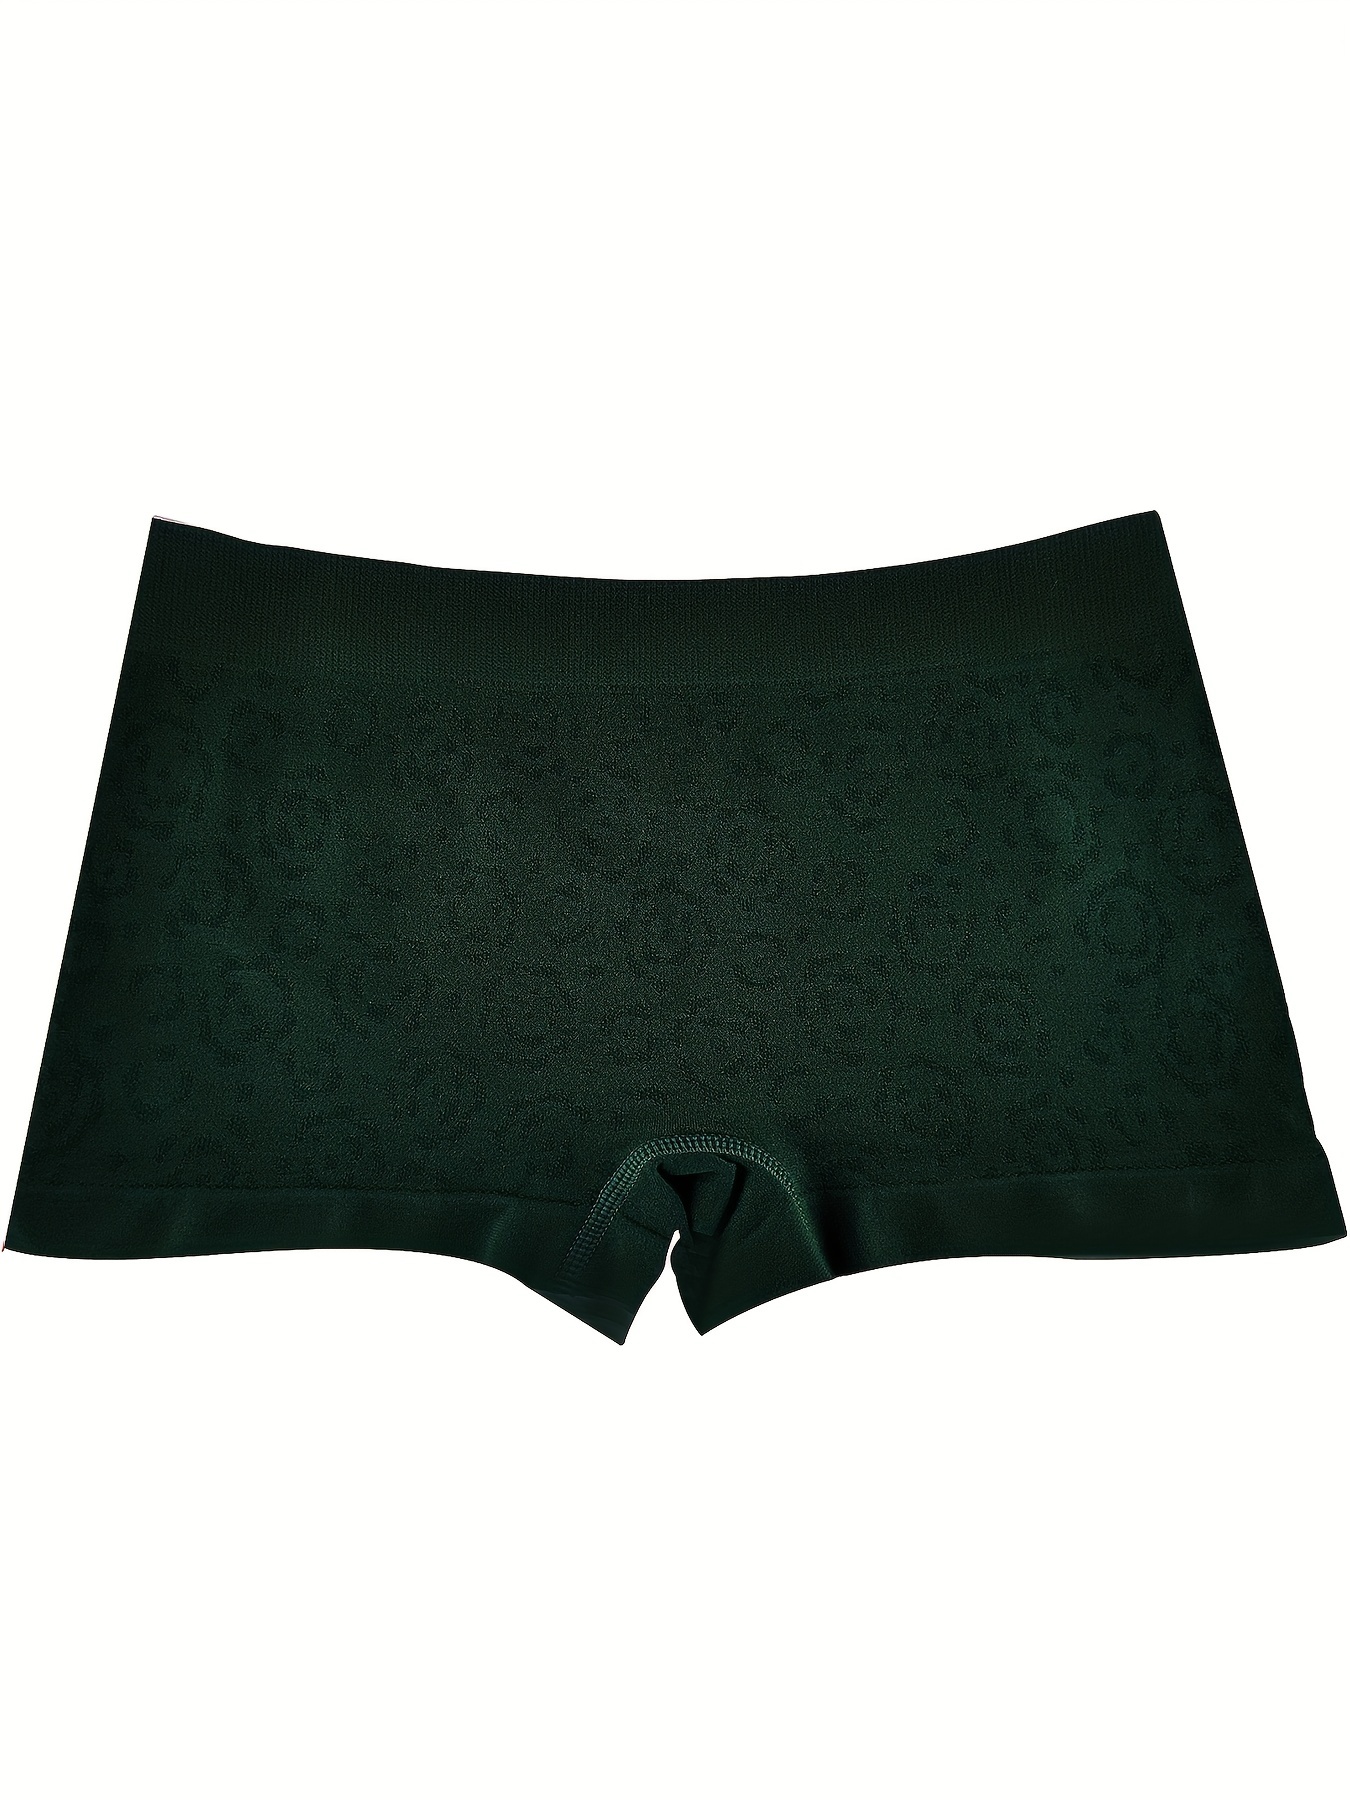 Women's Champion BOYSHORT Underwear Panties 3-Pairs Black/pink/green Size  L/7